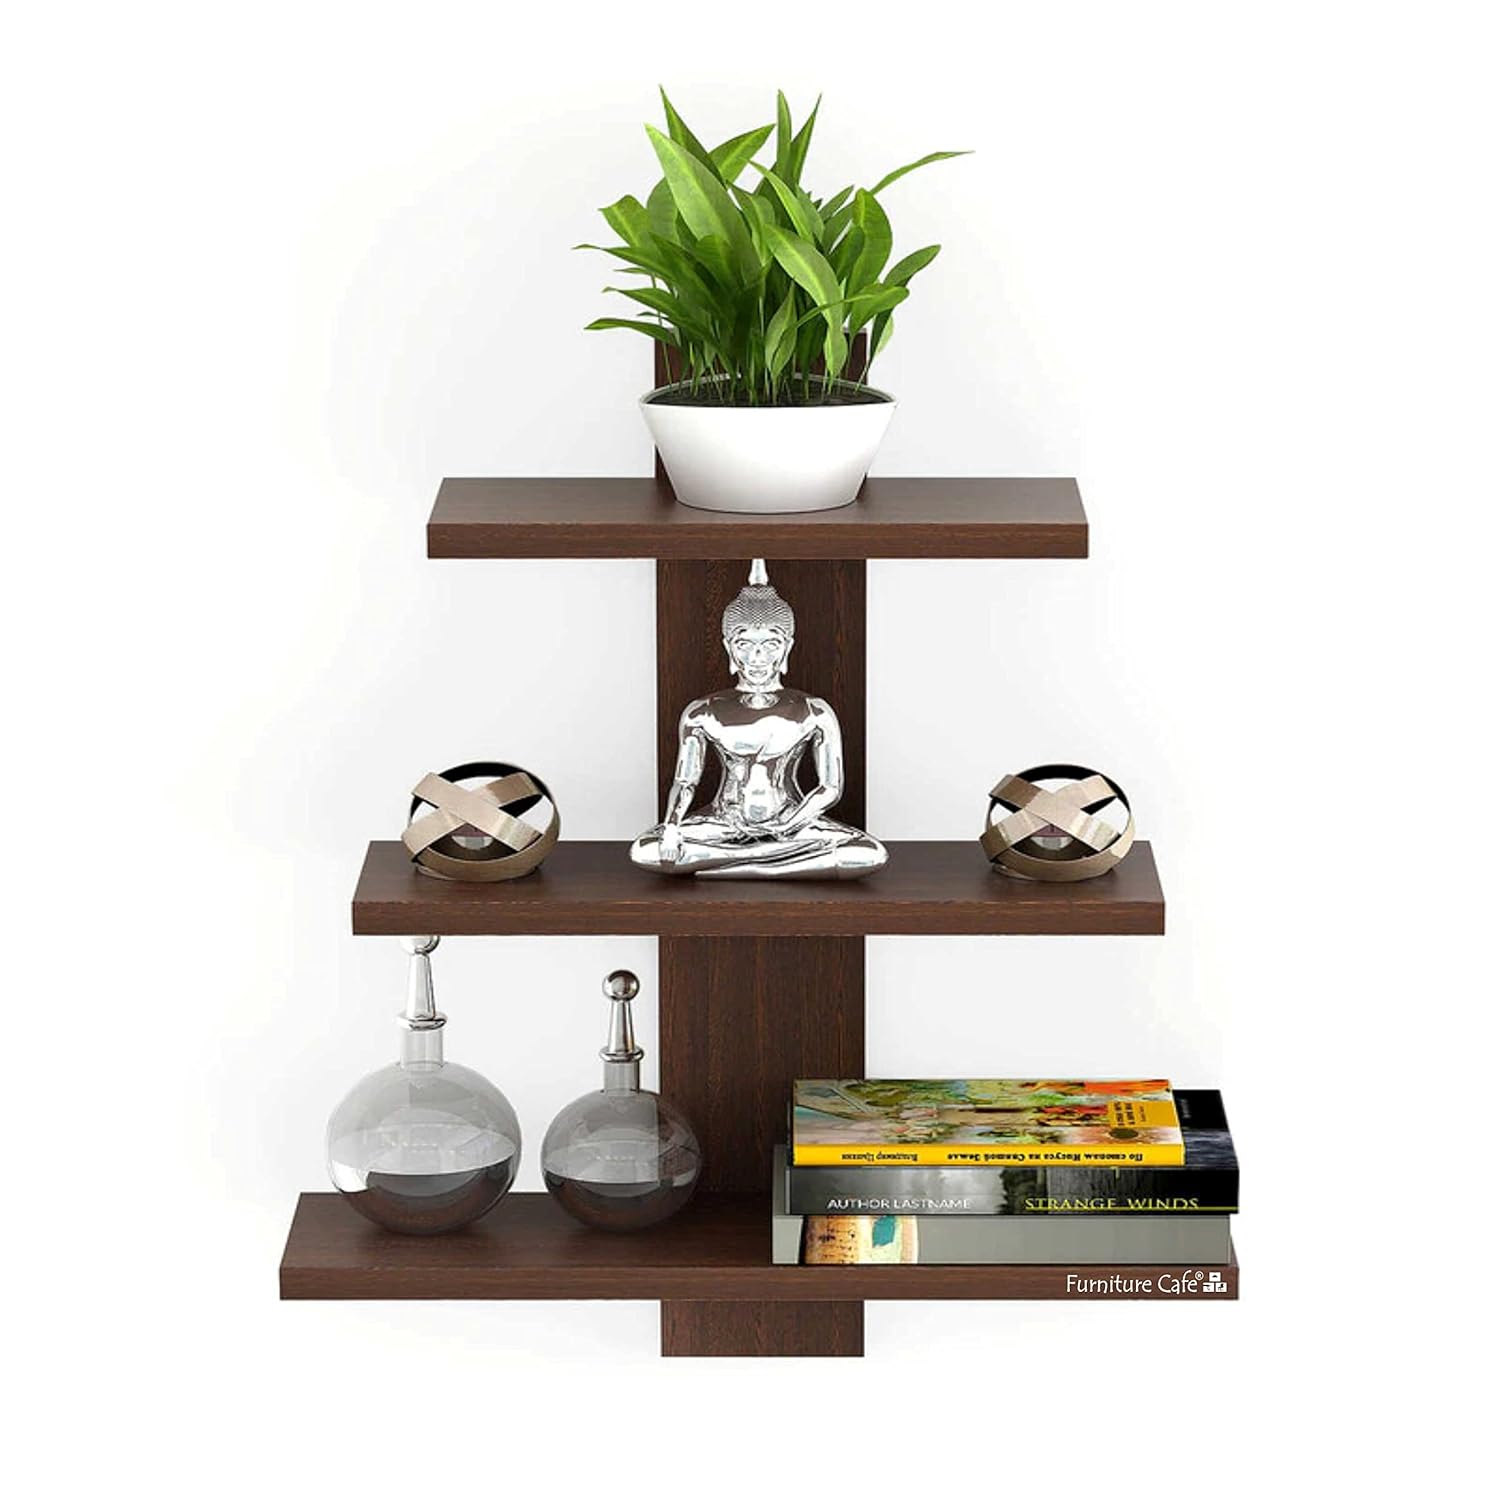 Furniture Cafe® Wooden Wall Shelves